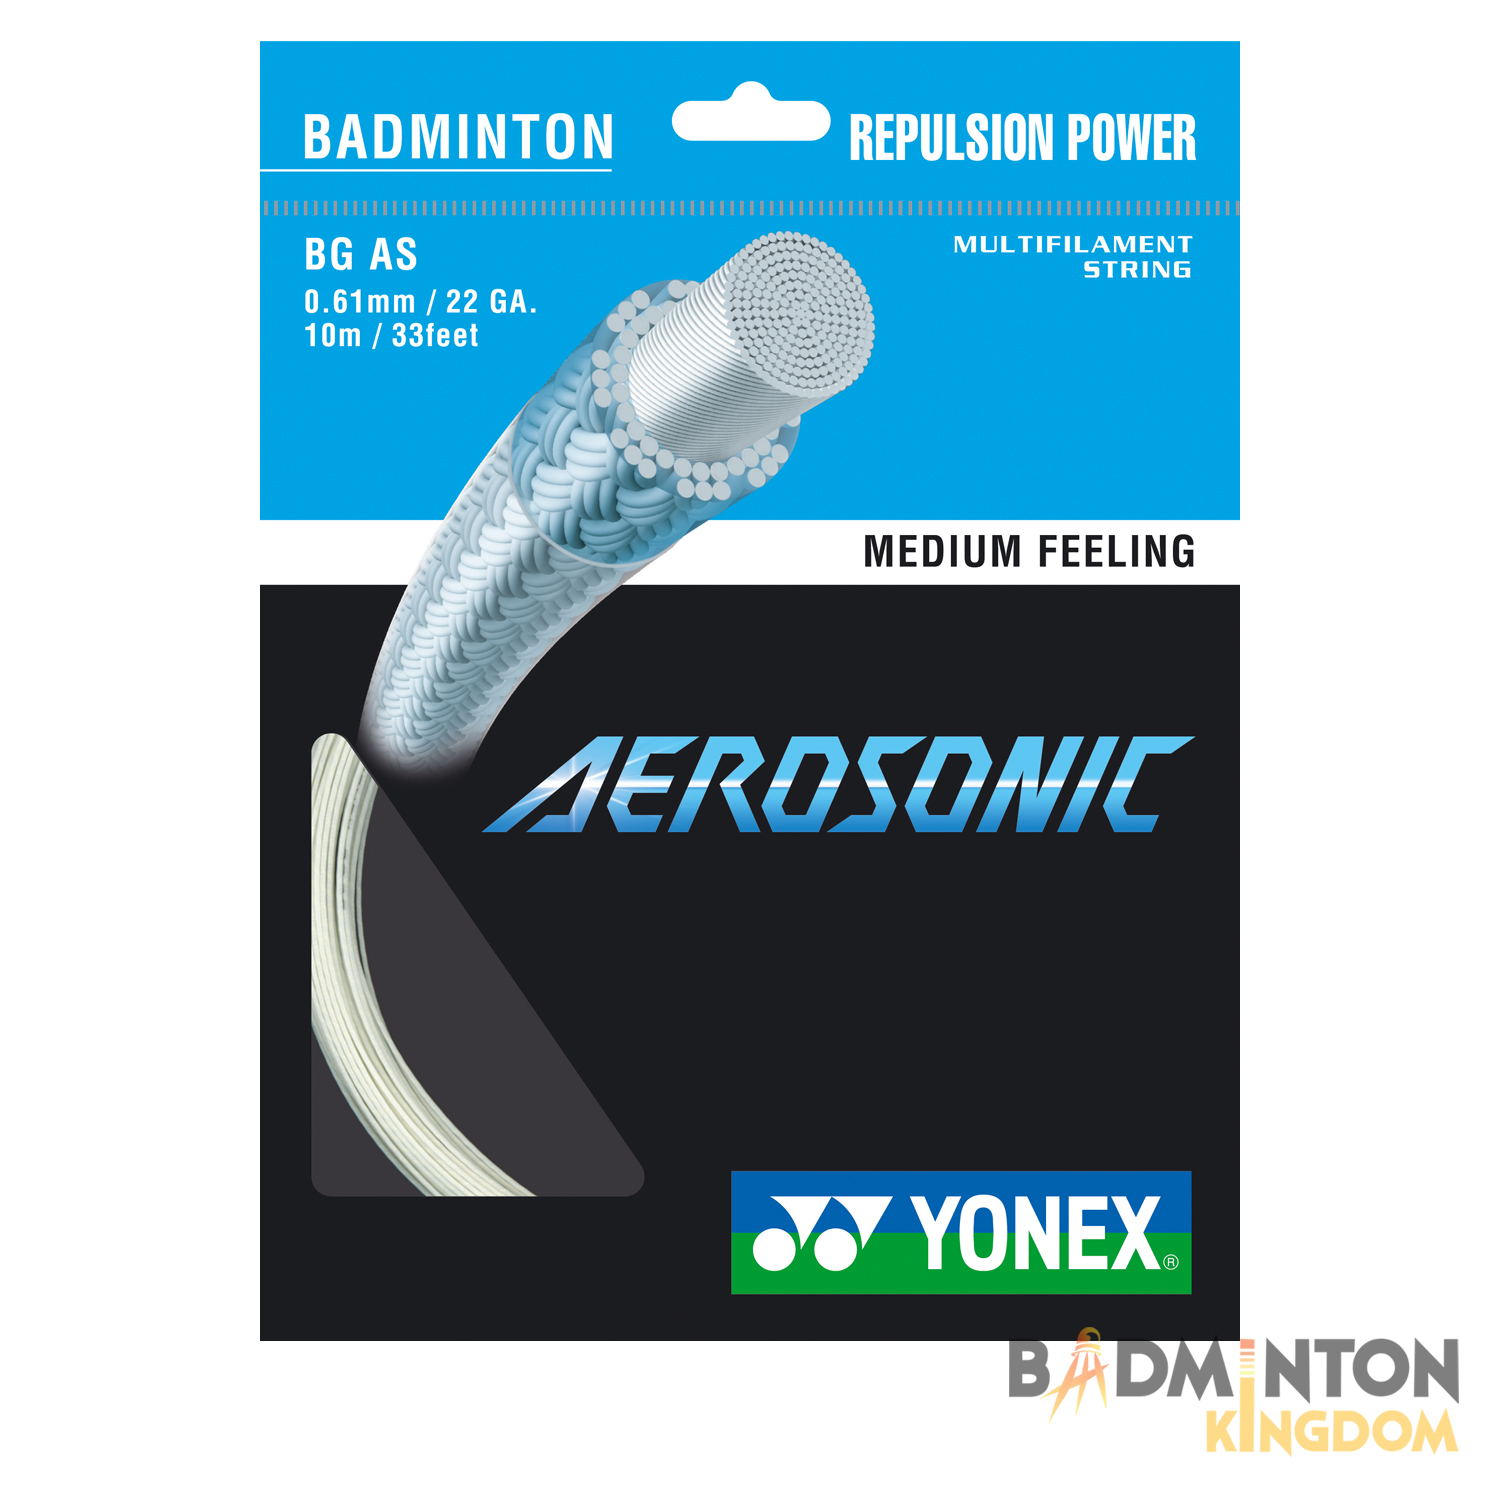 yonex-aerosonic-boost-badminton-string-single-set